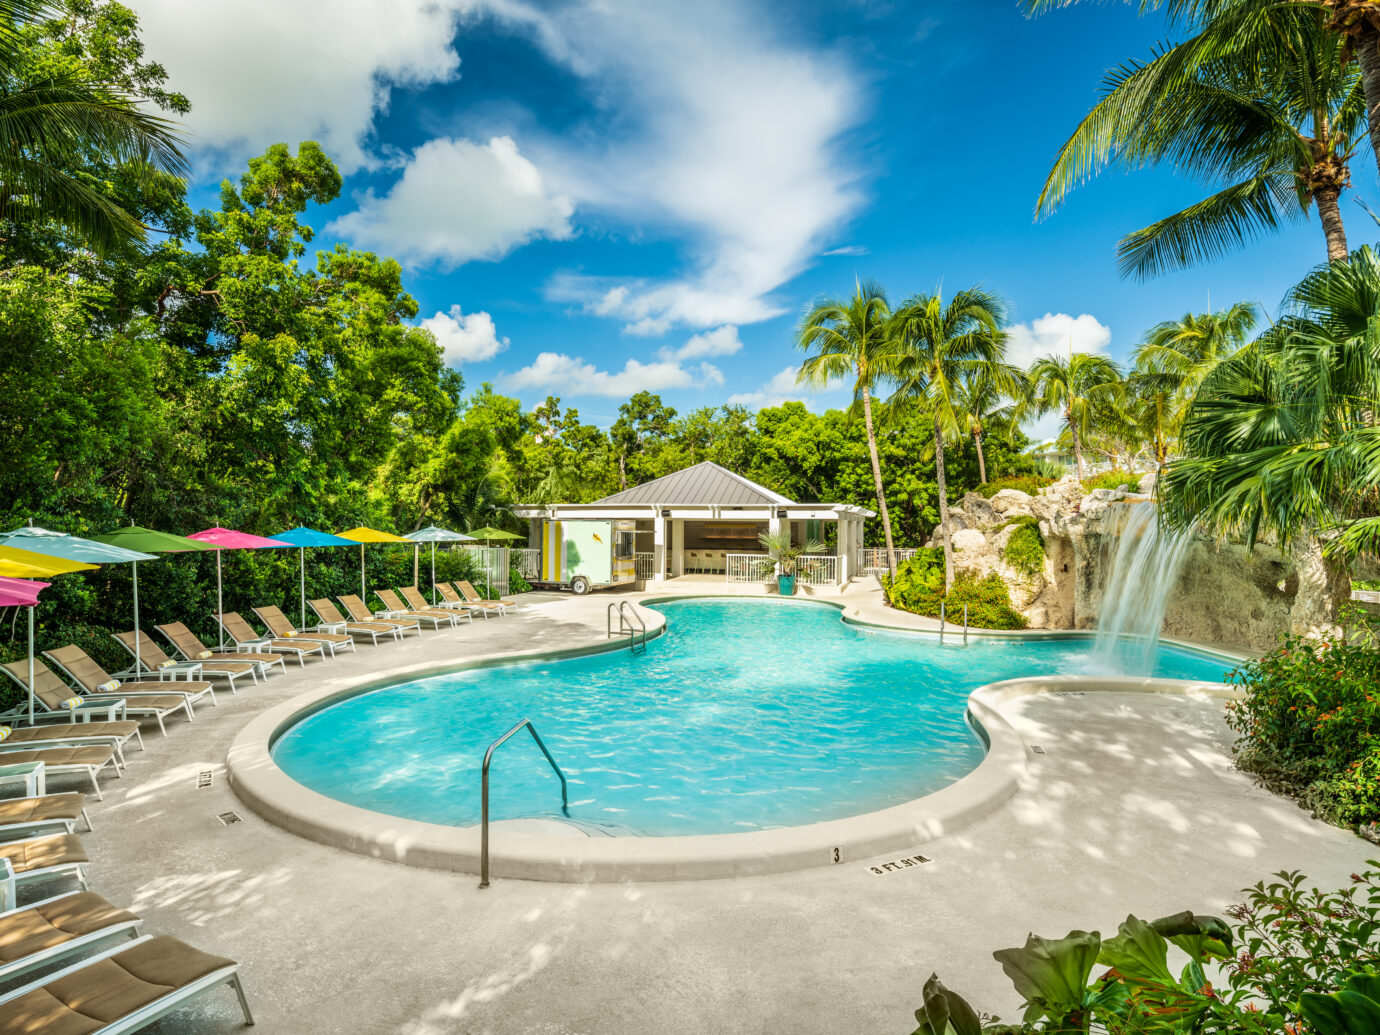 Pool at Baker's Cay Resort